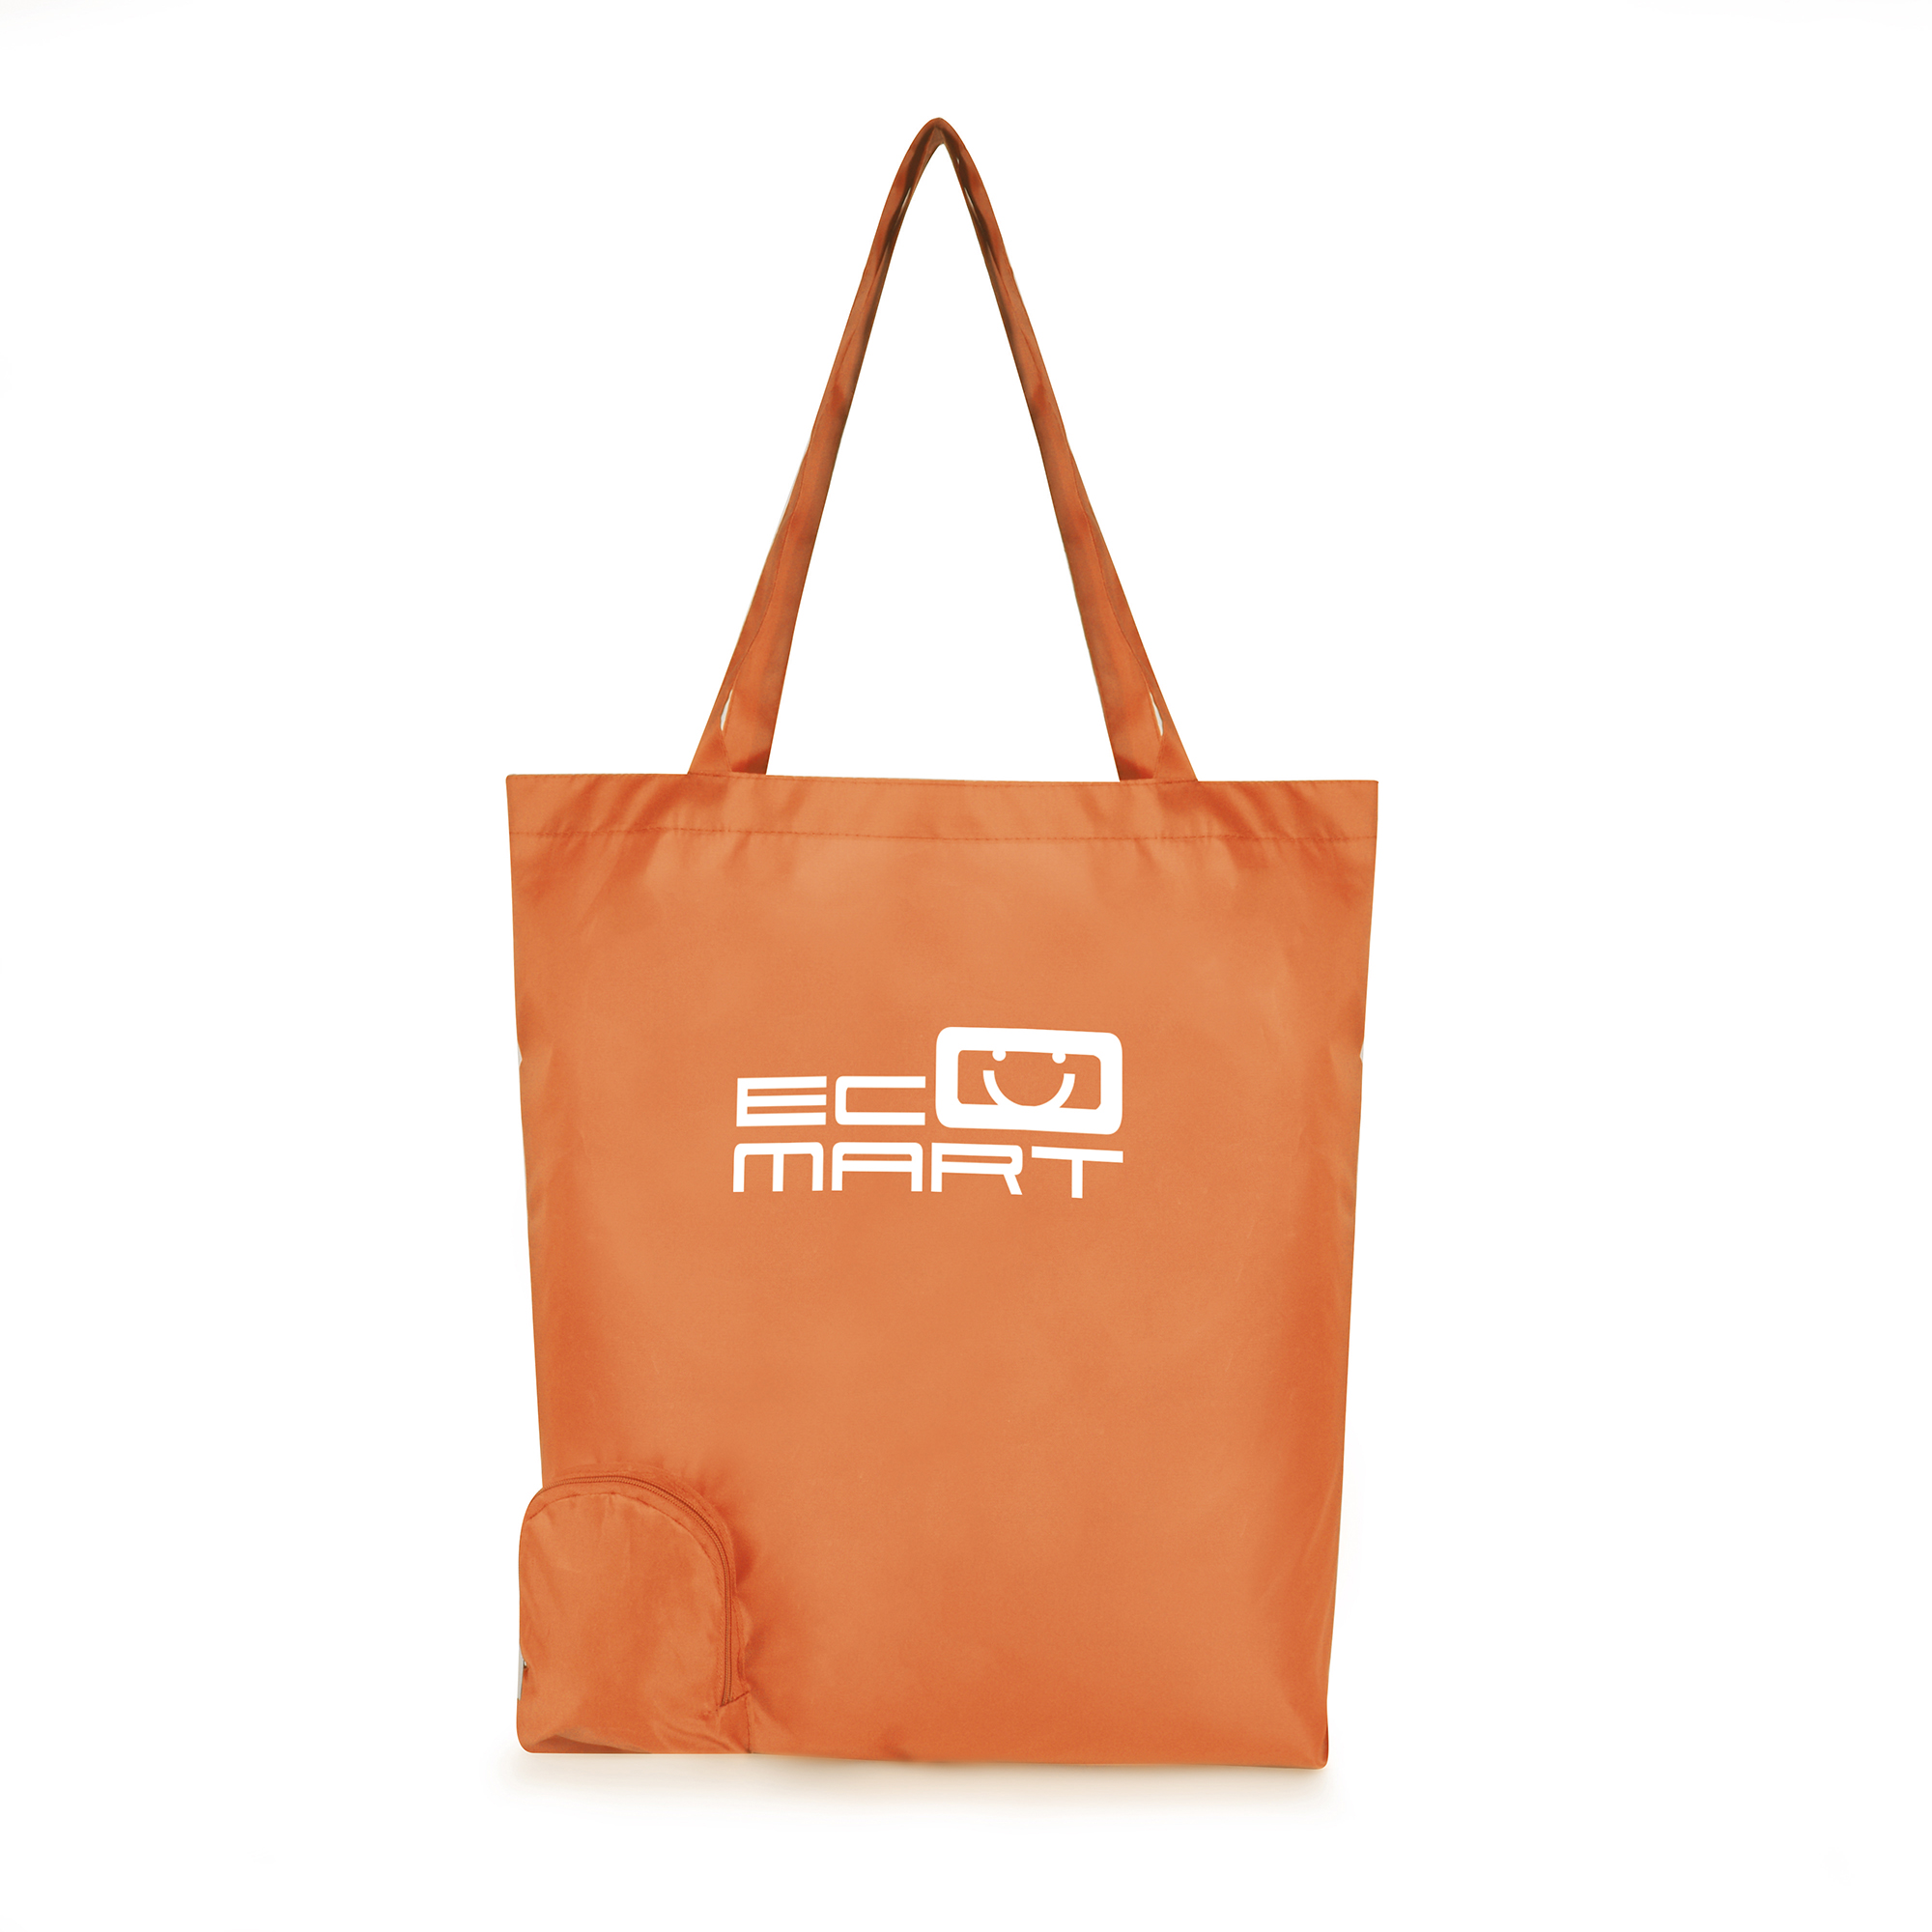 The Printed Bag Guide » Blog Archive » TRAFFORD FOLDABLE SHOPPER BAG